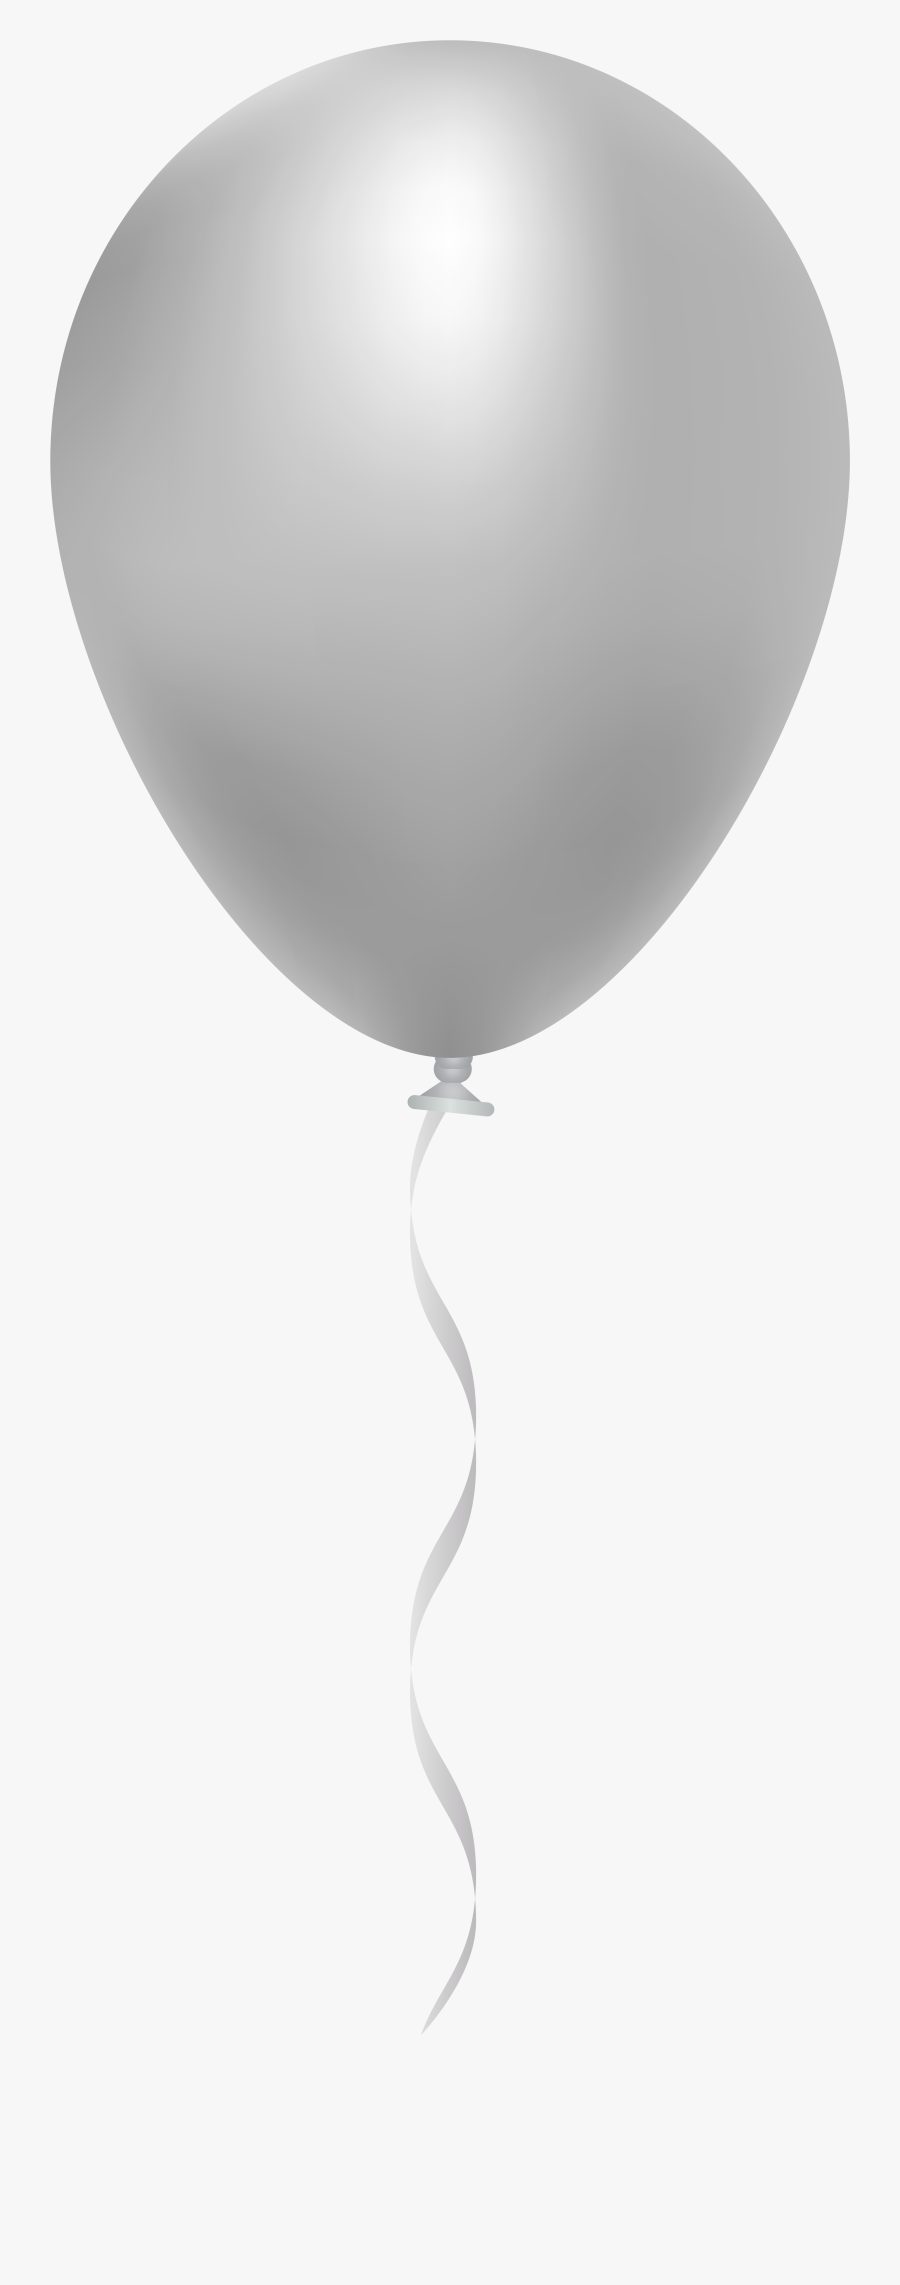 White Balloon Png - Balloon, Transparent Clipart